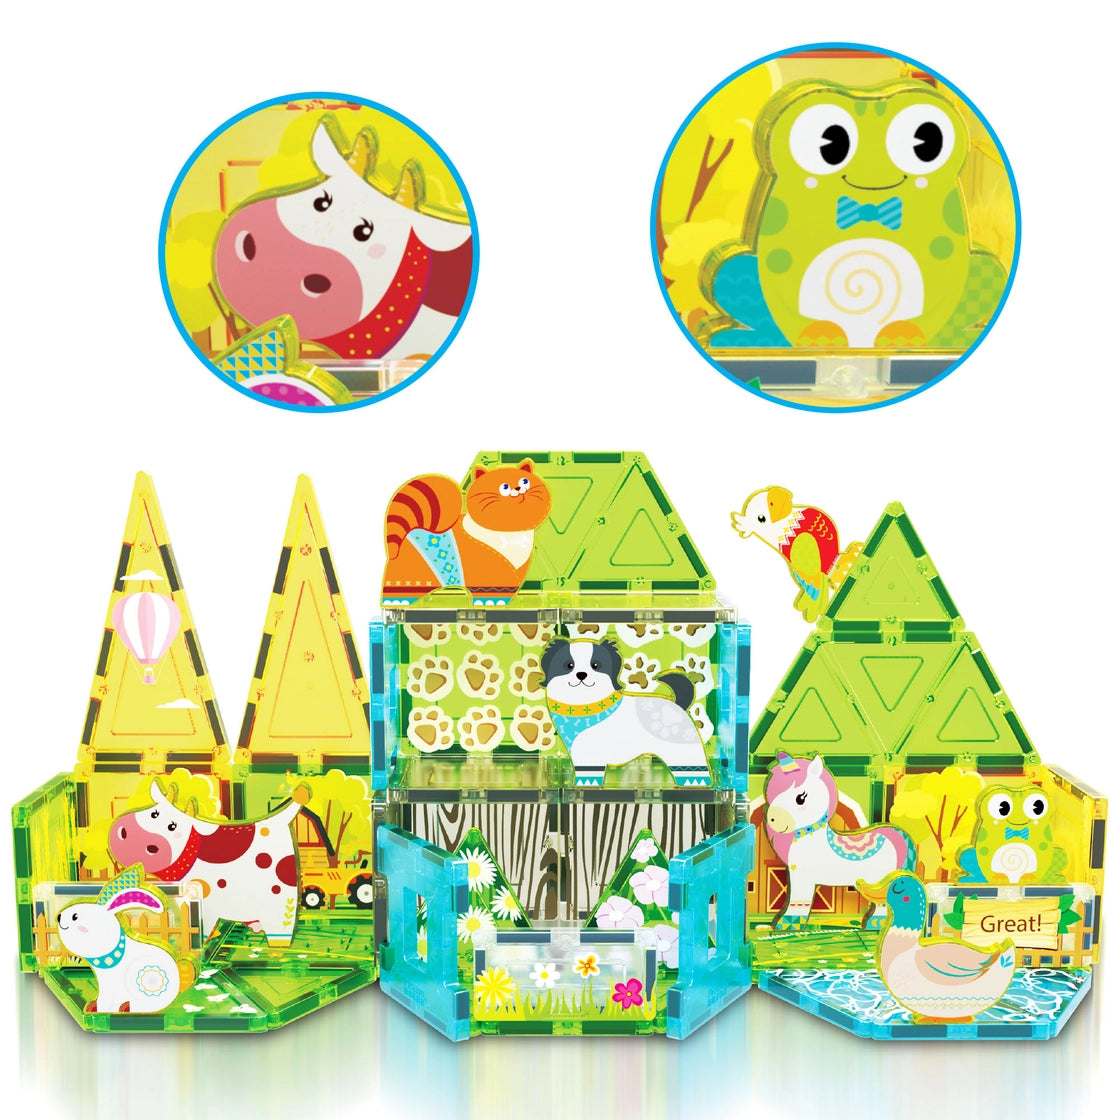 Picasso Magnet Tile Playset 52 Piece Building Blocks Farm Animal Toy Set